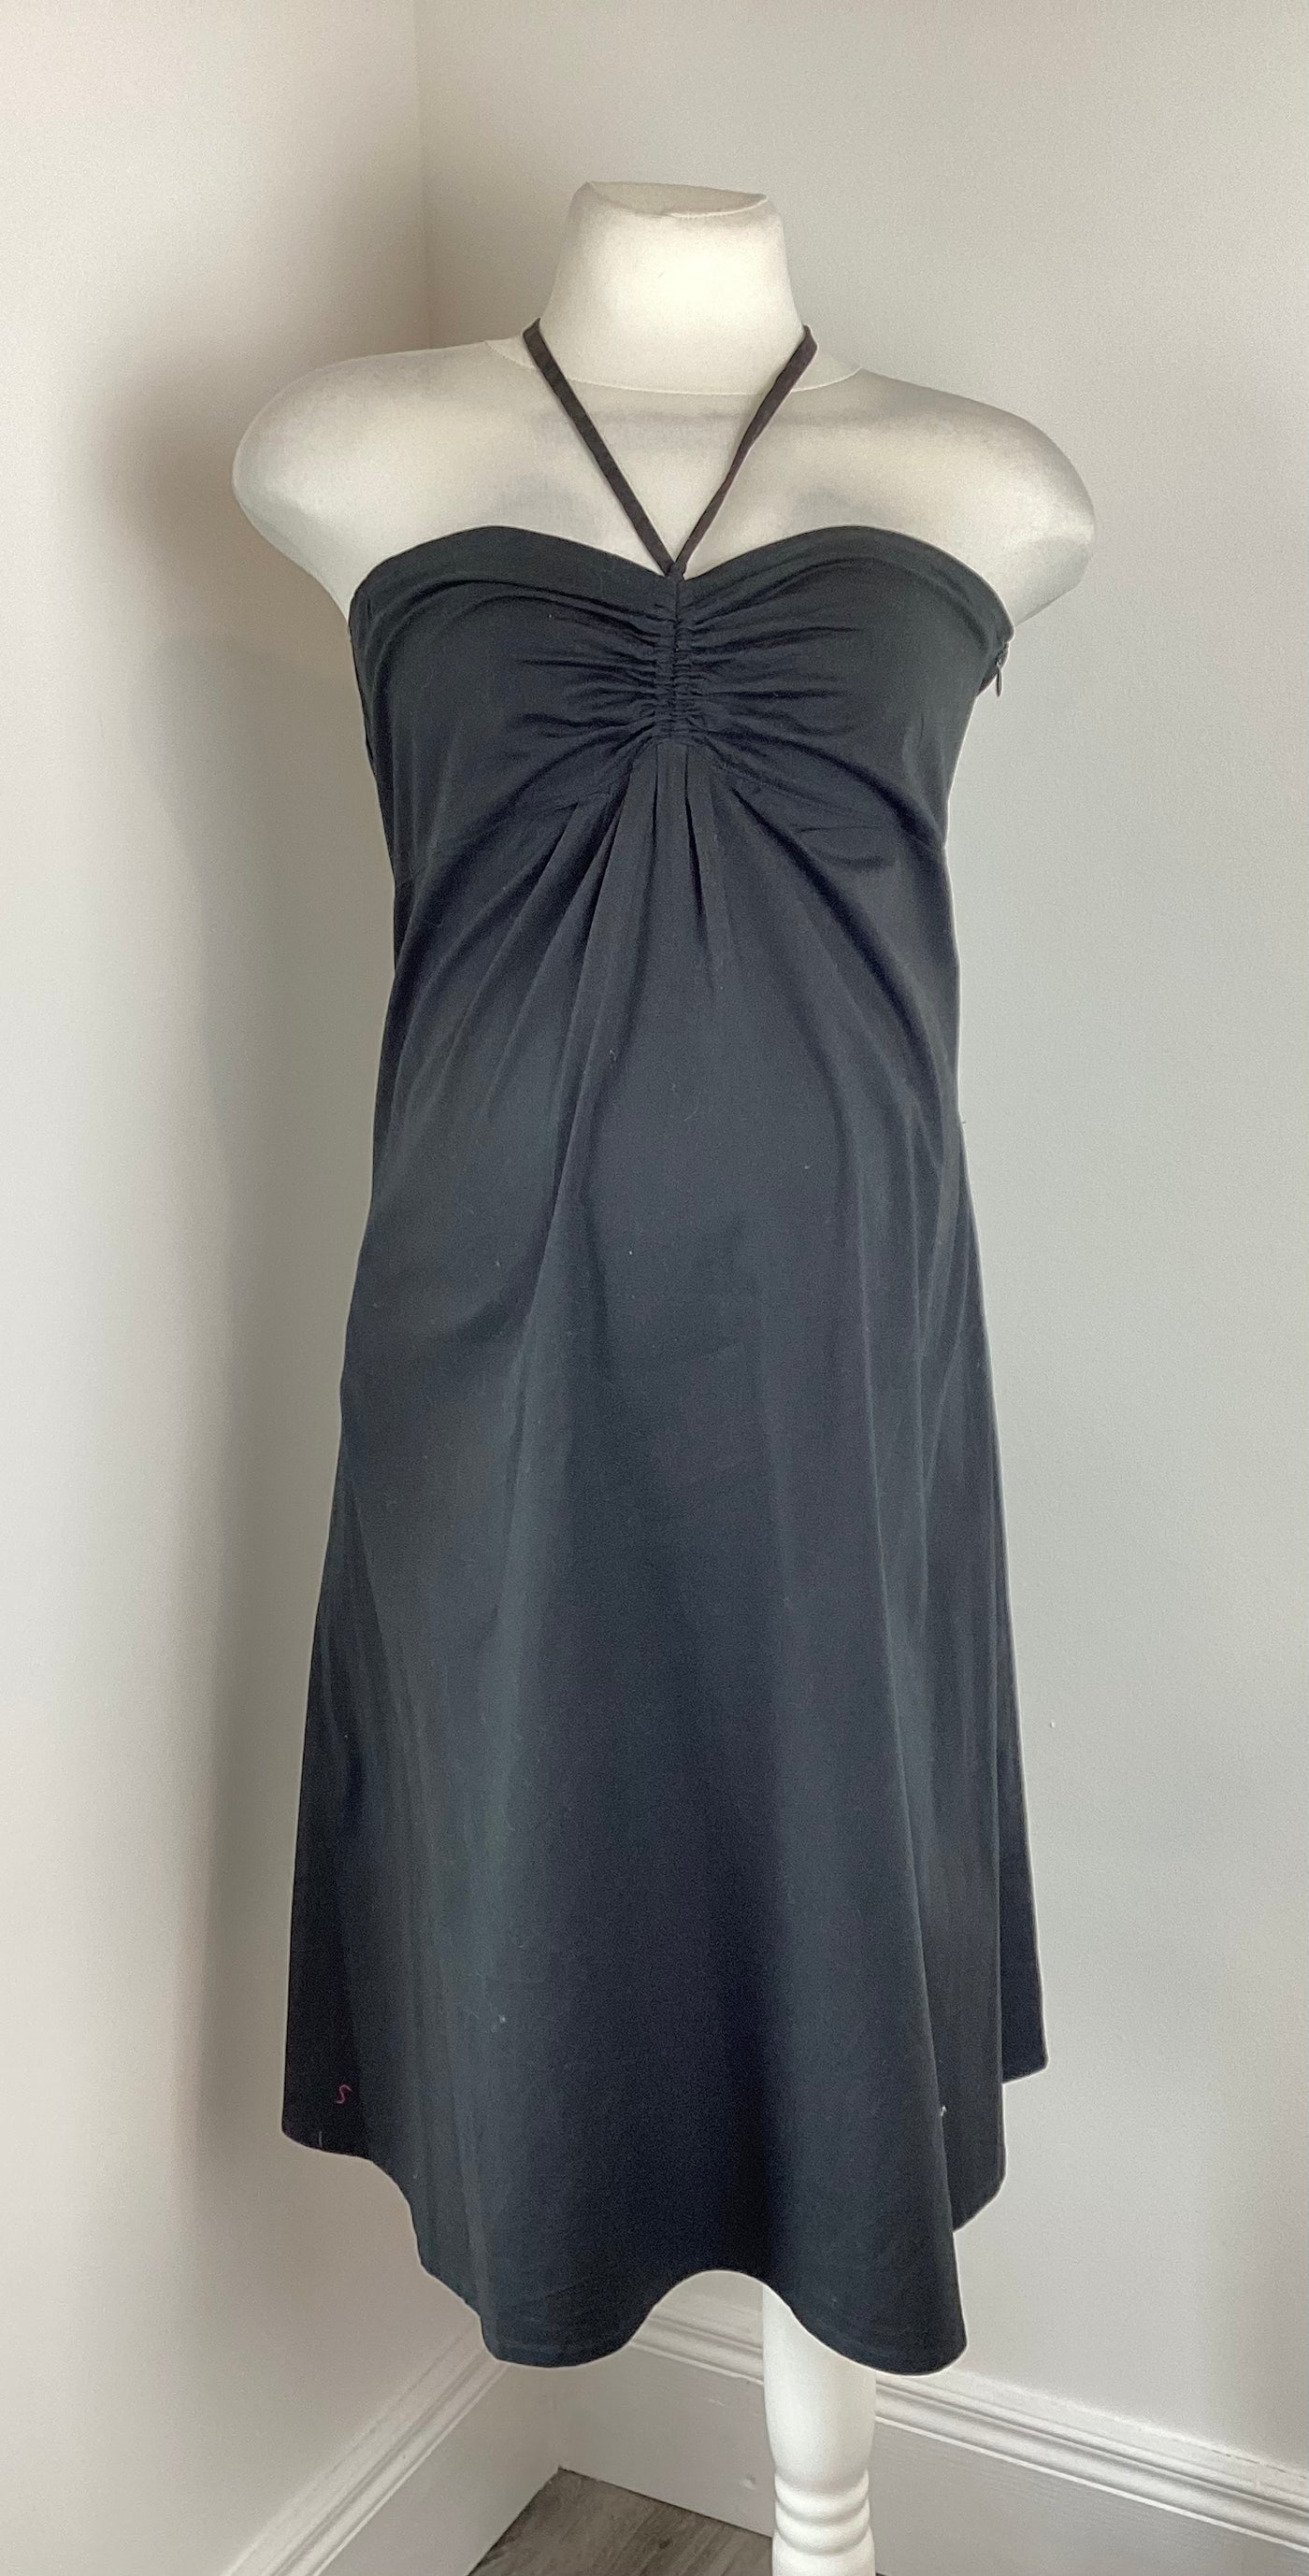 Cadeau Black Strapless Halterneck Dress - Size L (Approx UK 12)